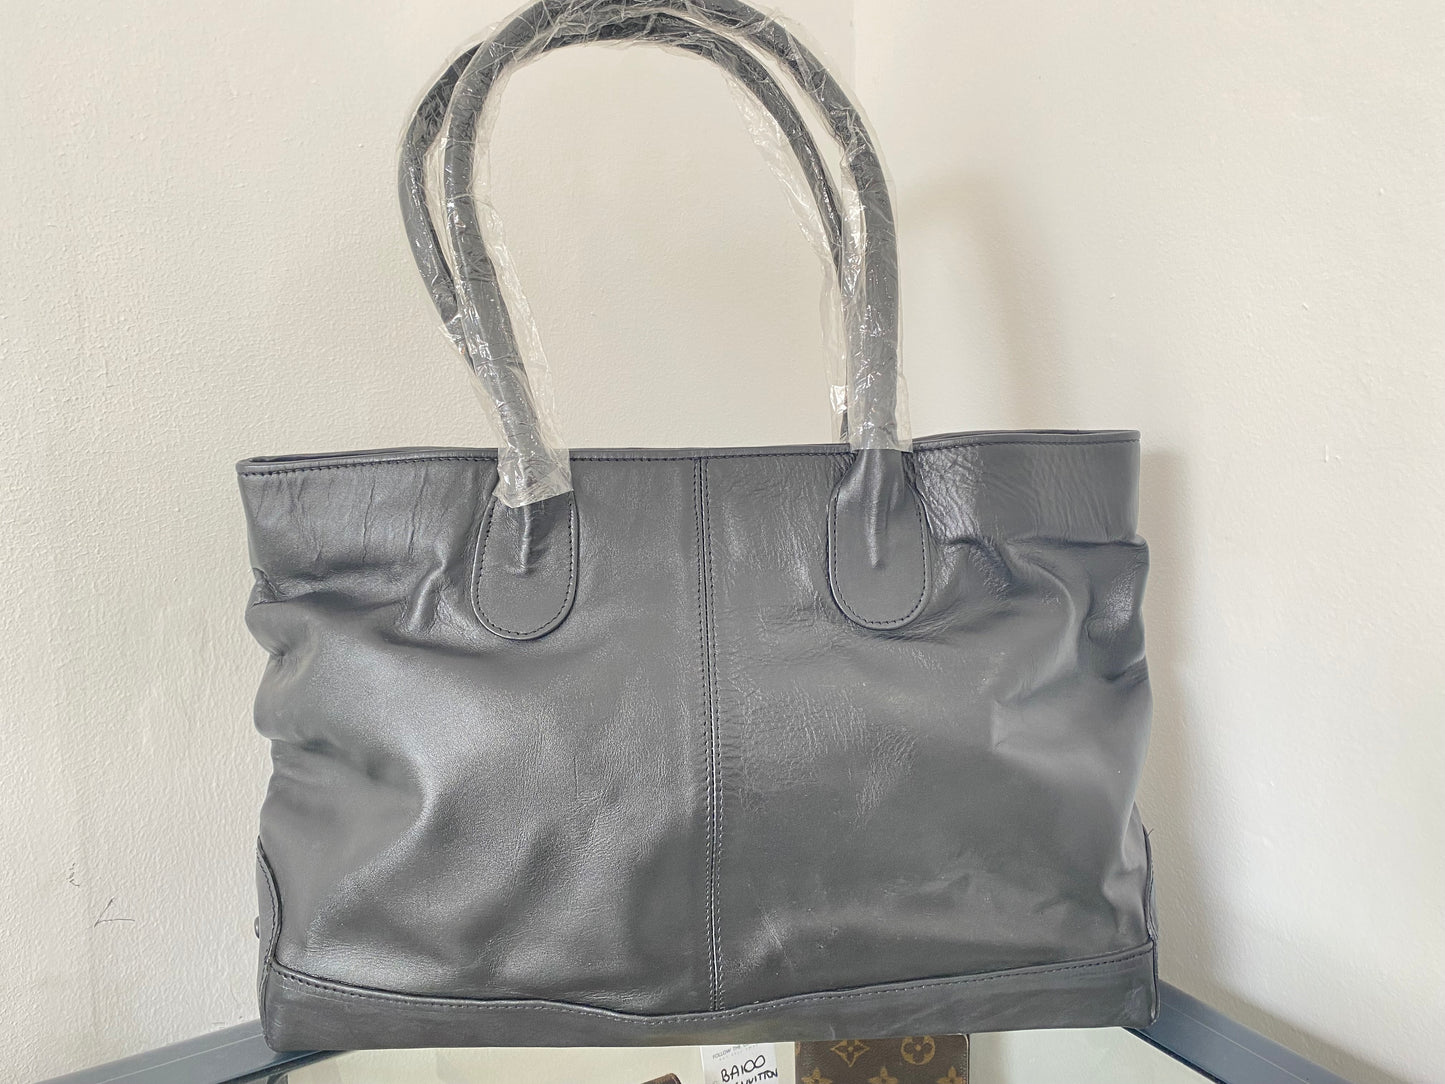 Tods Black Leather Tote Handbag